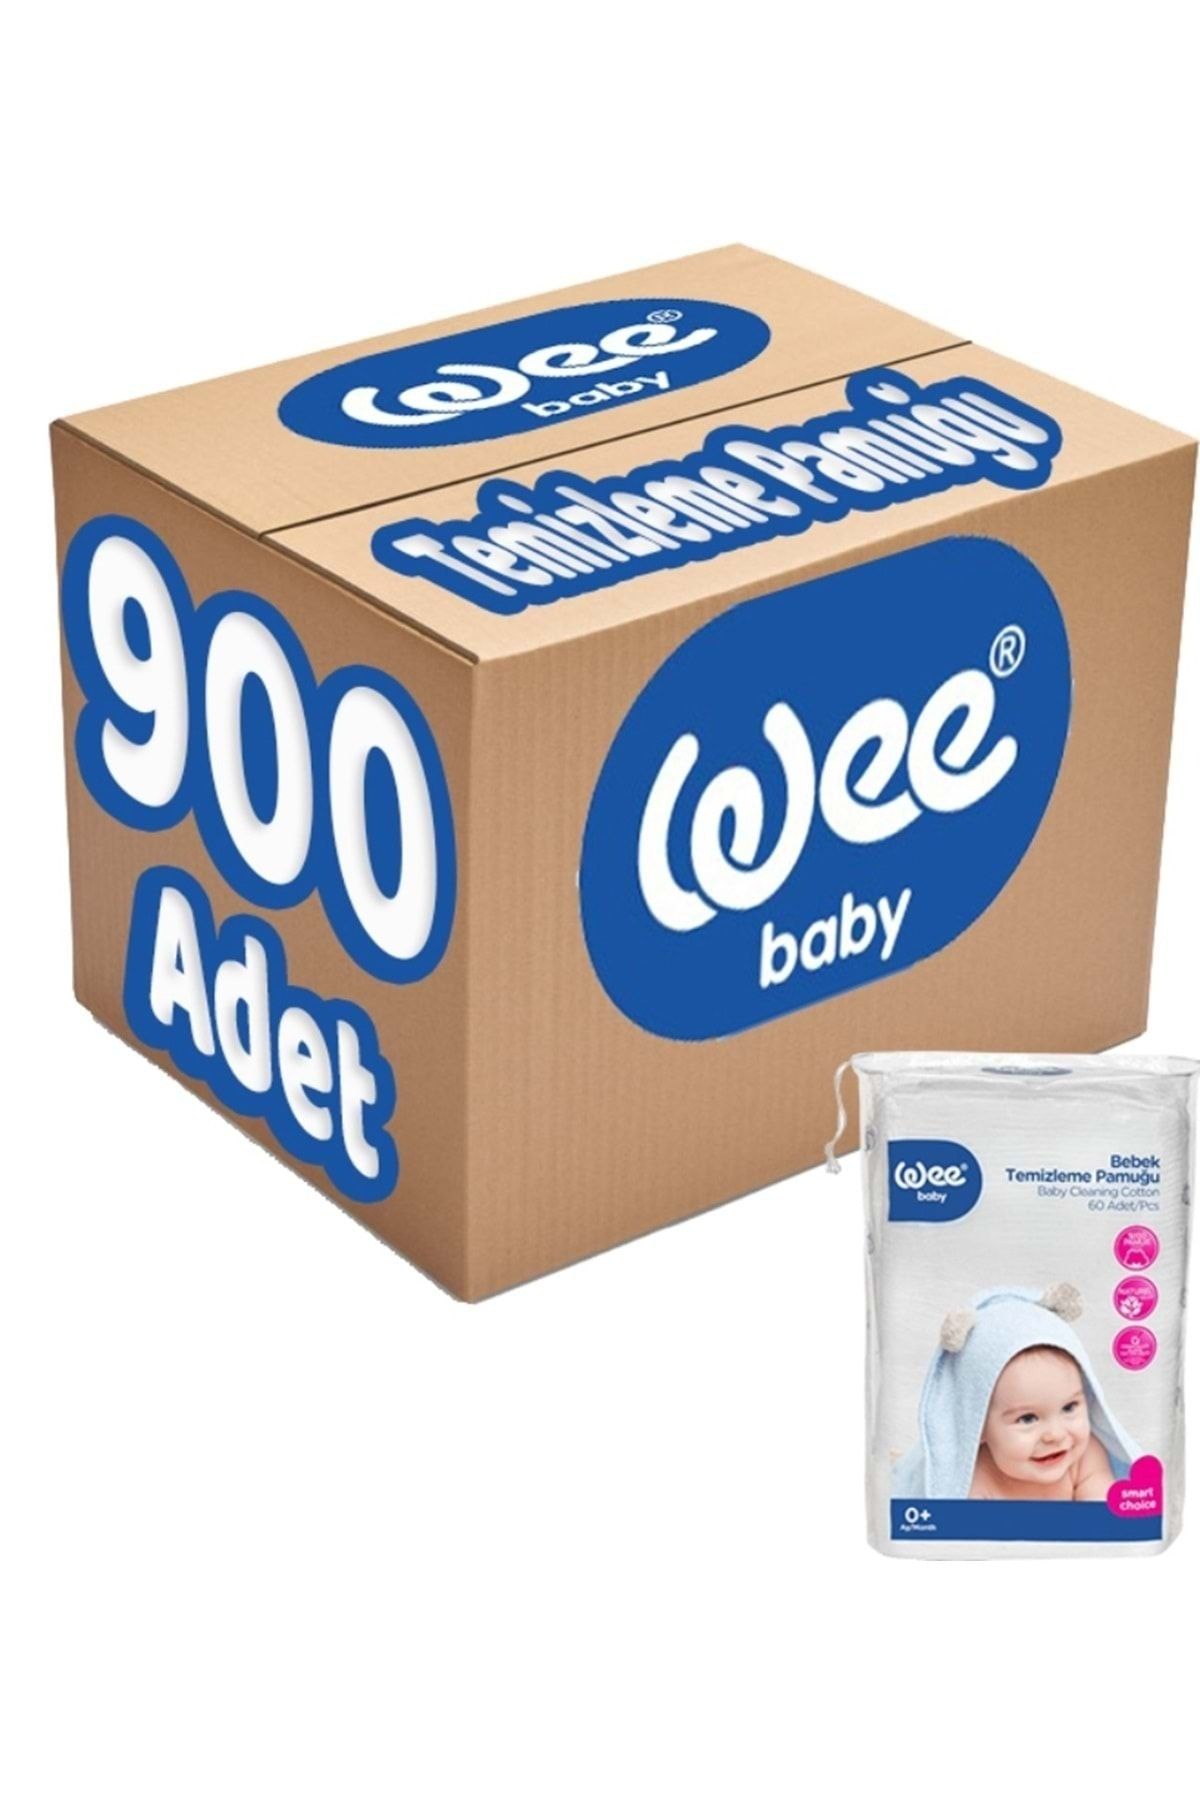 Wee Baby Bebek Temizleme Pamuğu 900 Adet (15pk*60)